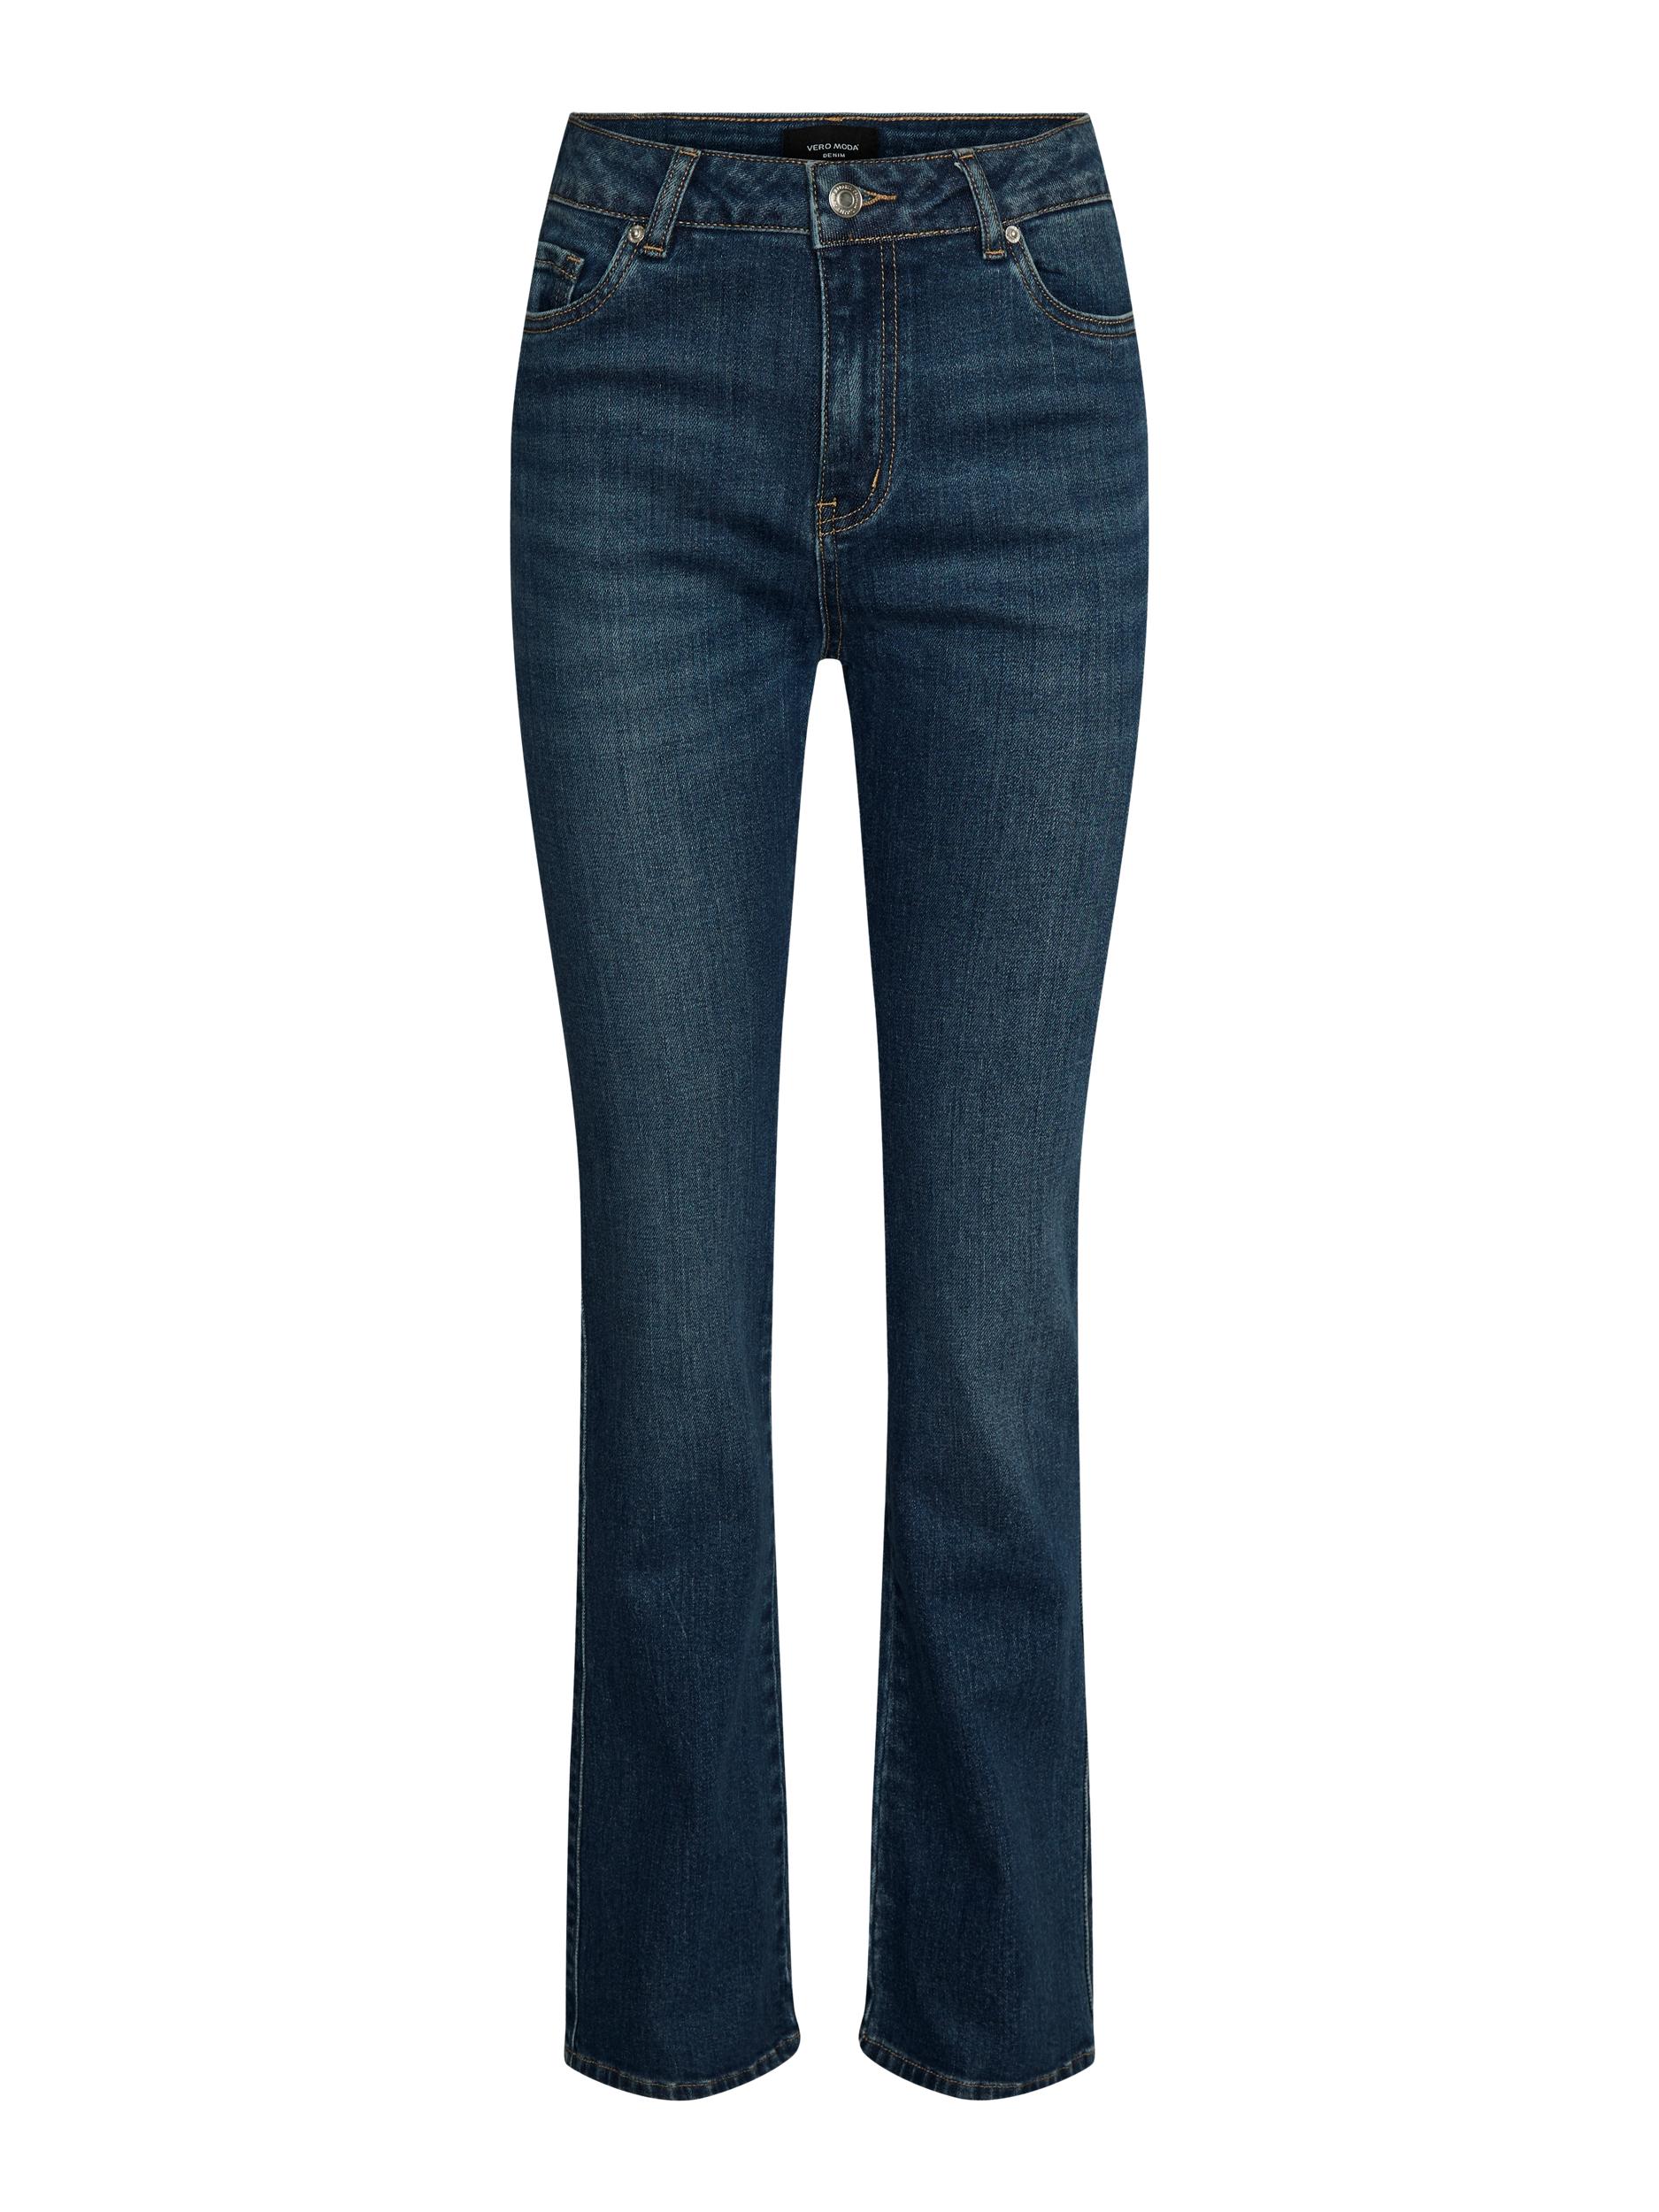 FINAL SALE - Saga high waist flare fit jeans, DARK BLEU DENIM, large